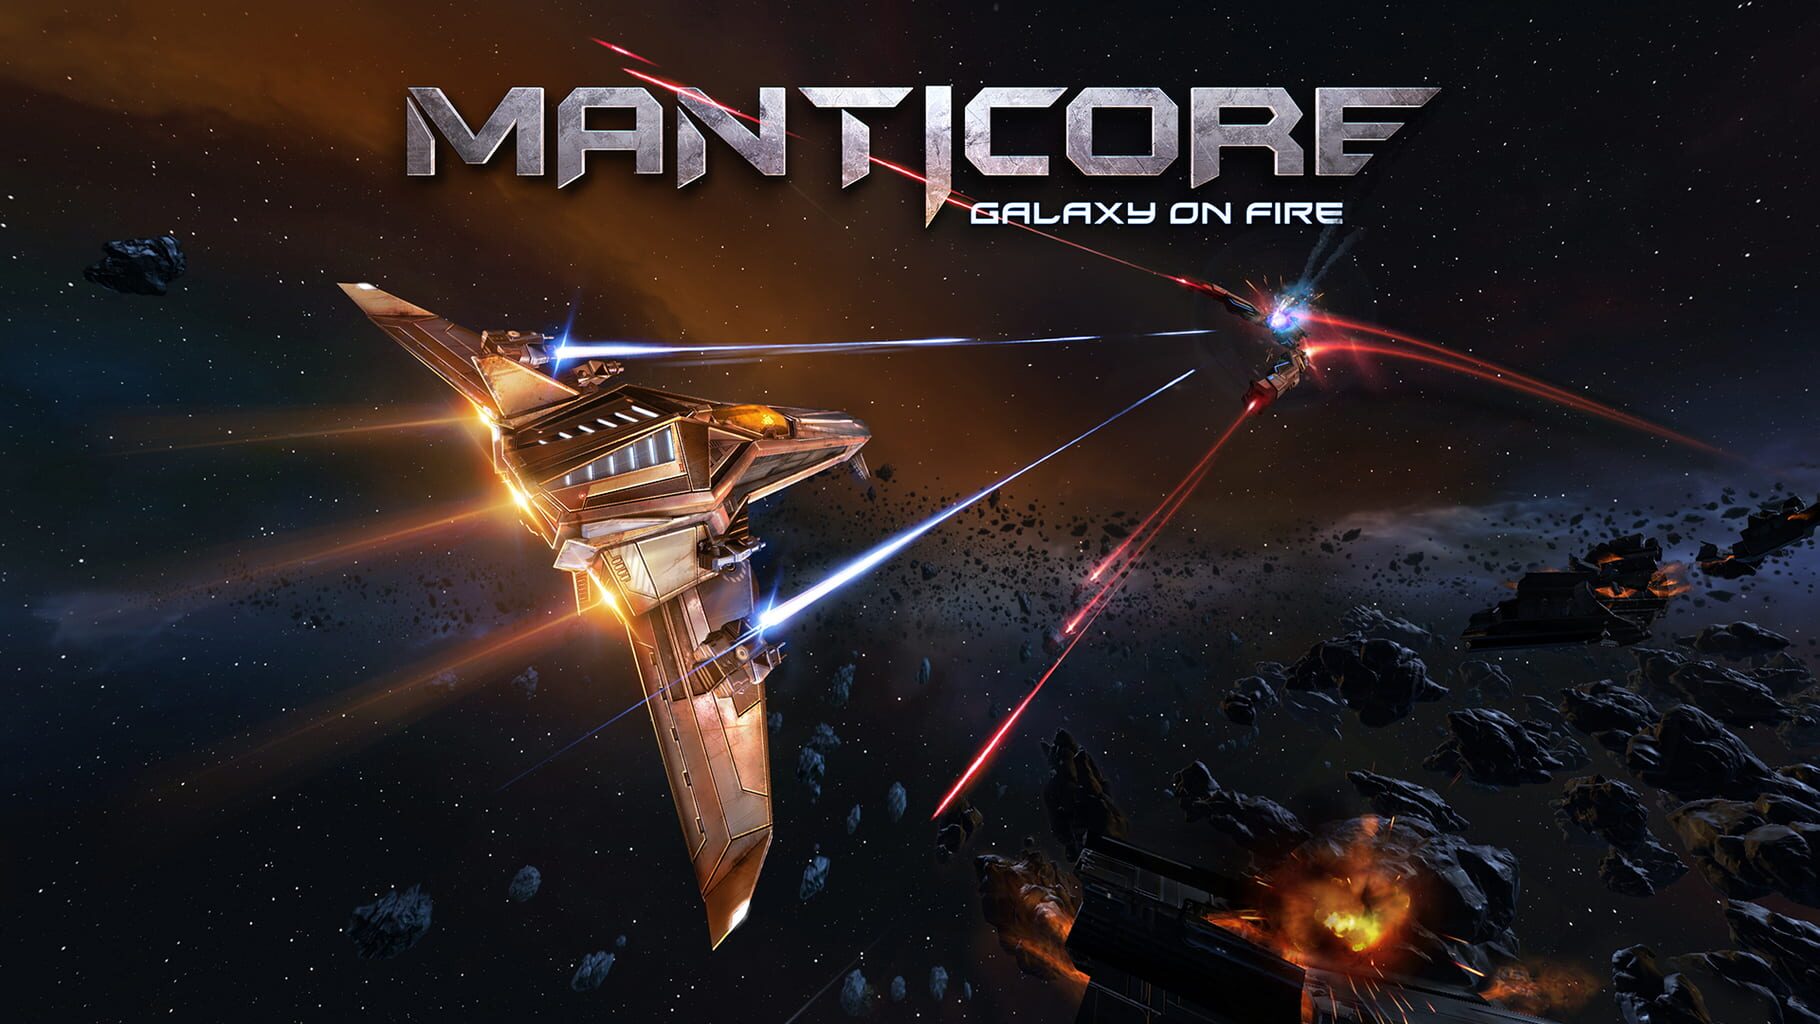 Galaxy on Fire 3: Manticore artwork